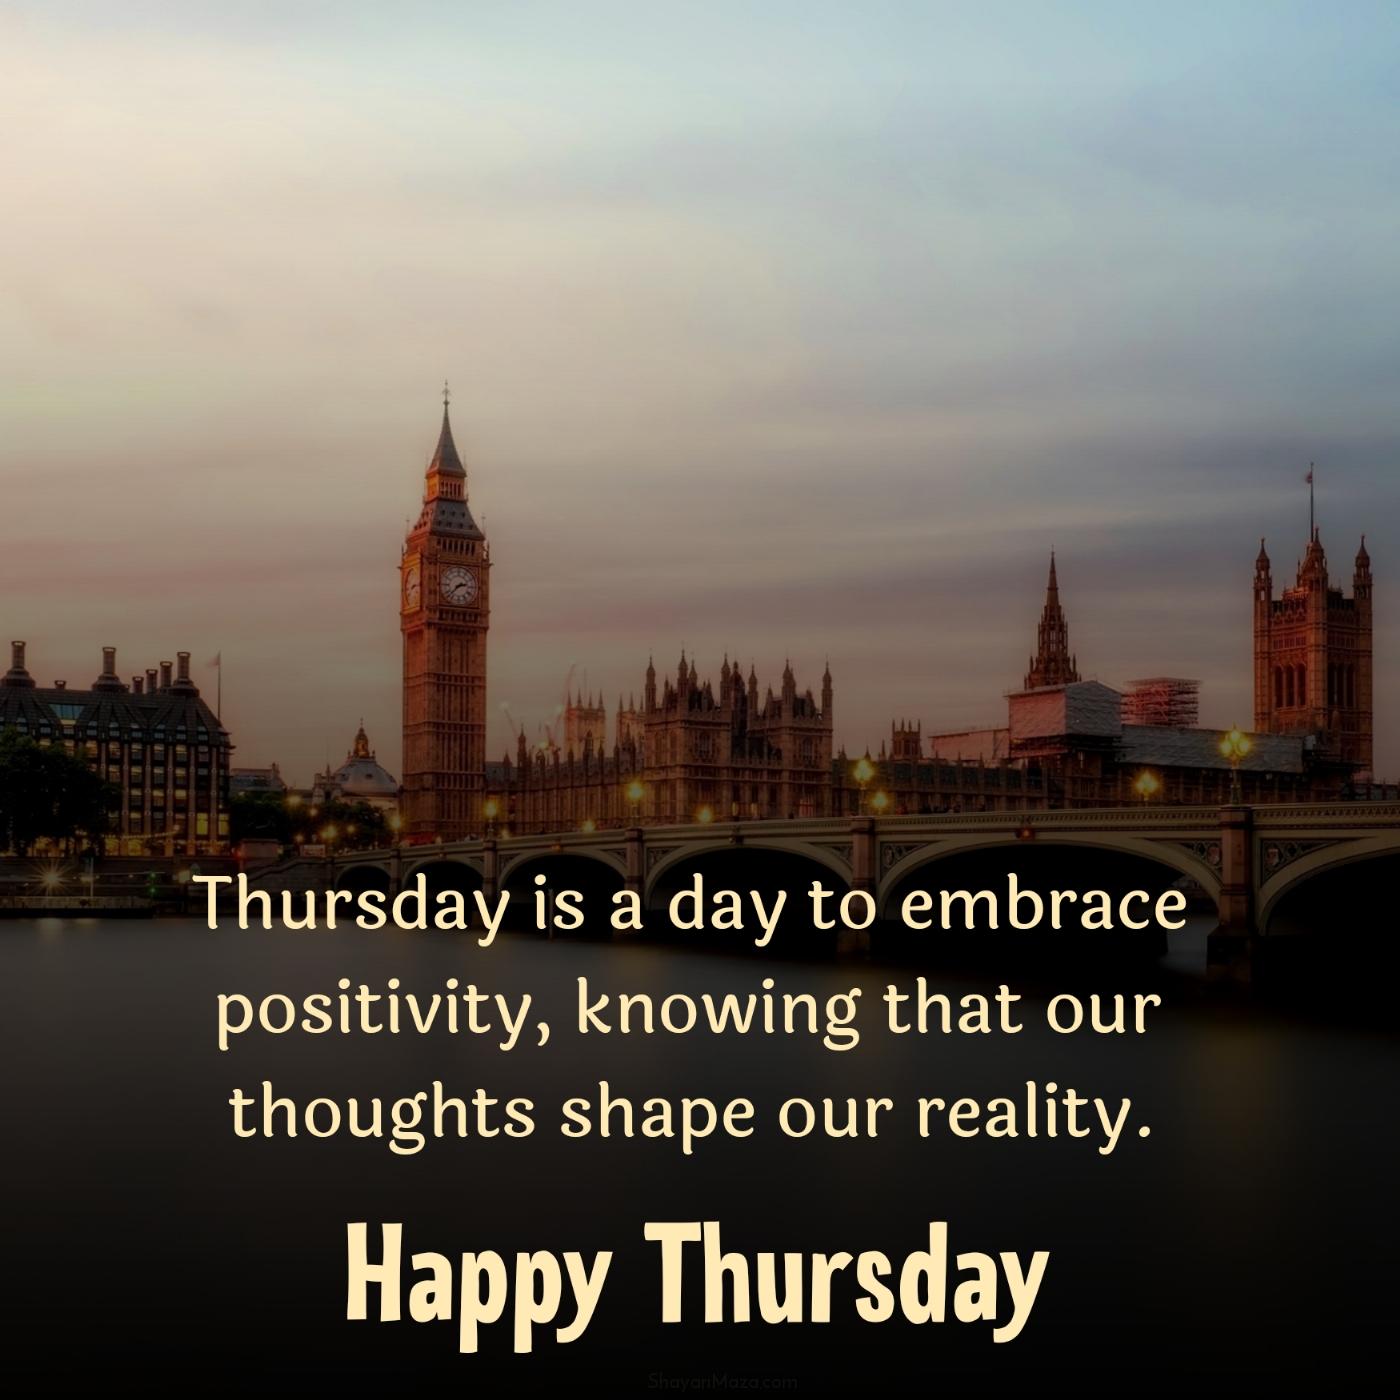 Thursday is a day to embrace positivity